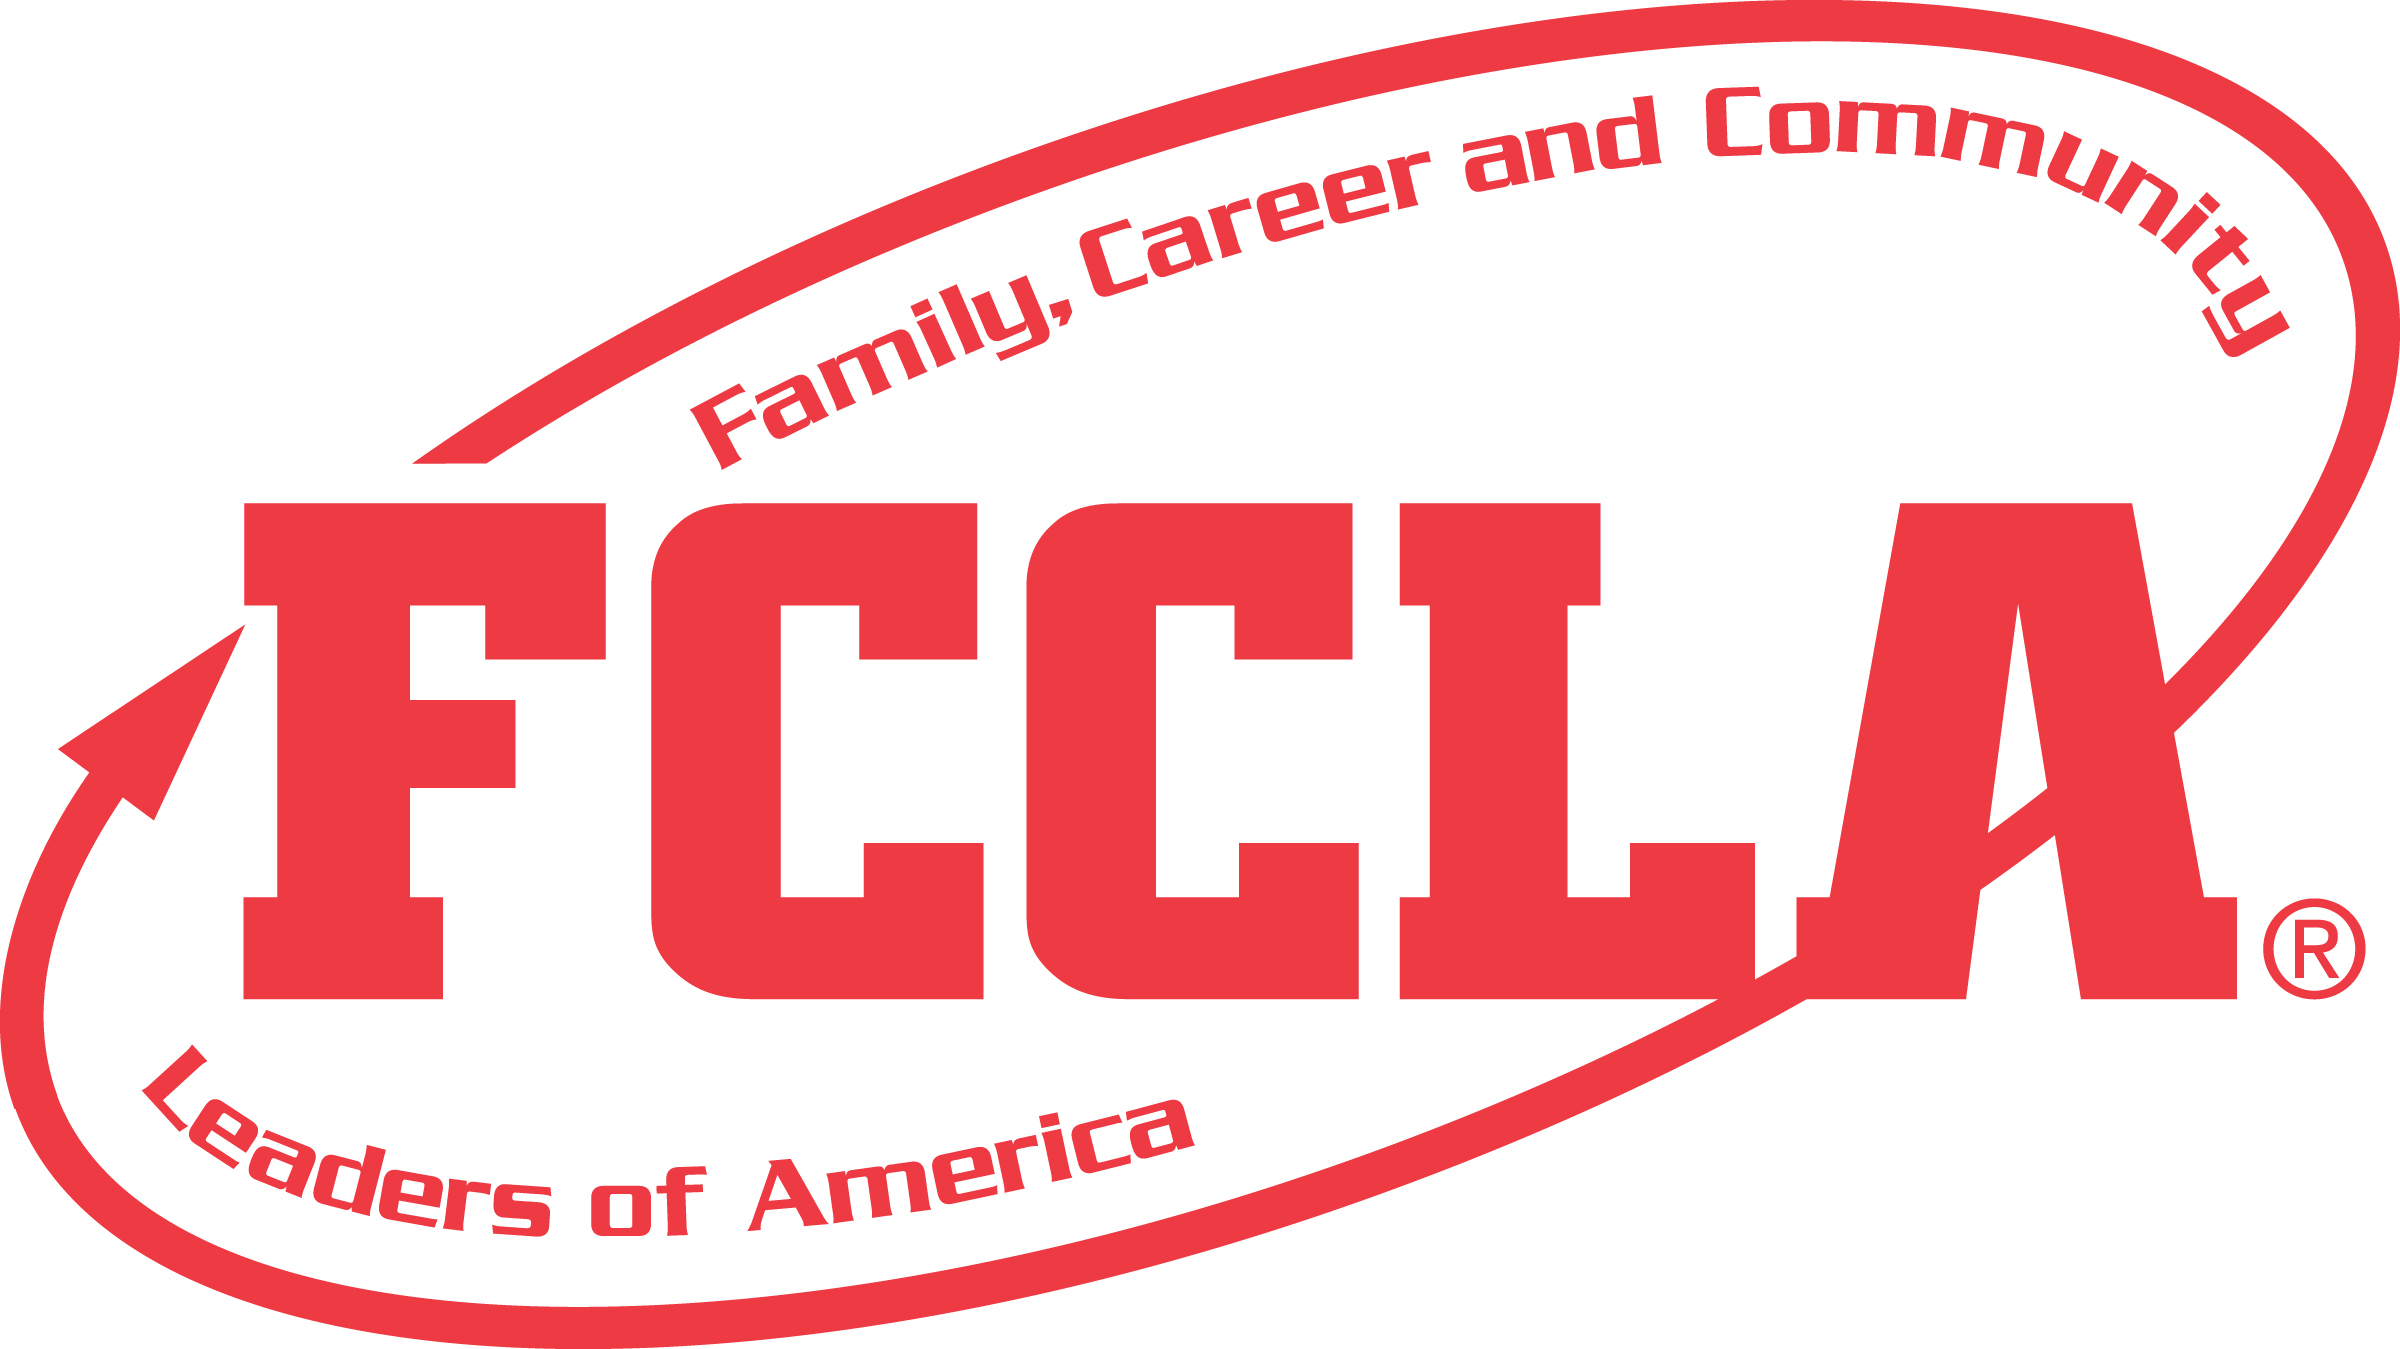 FCCLA-Emblem-Red.jpg